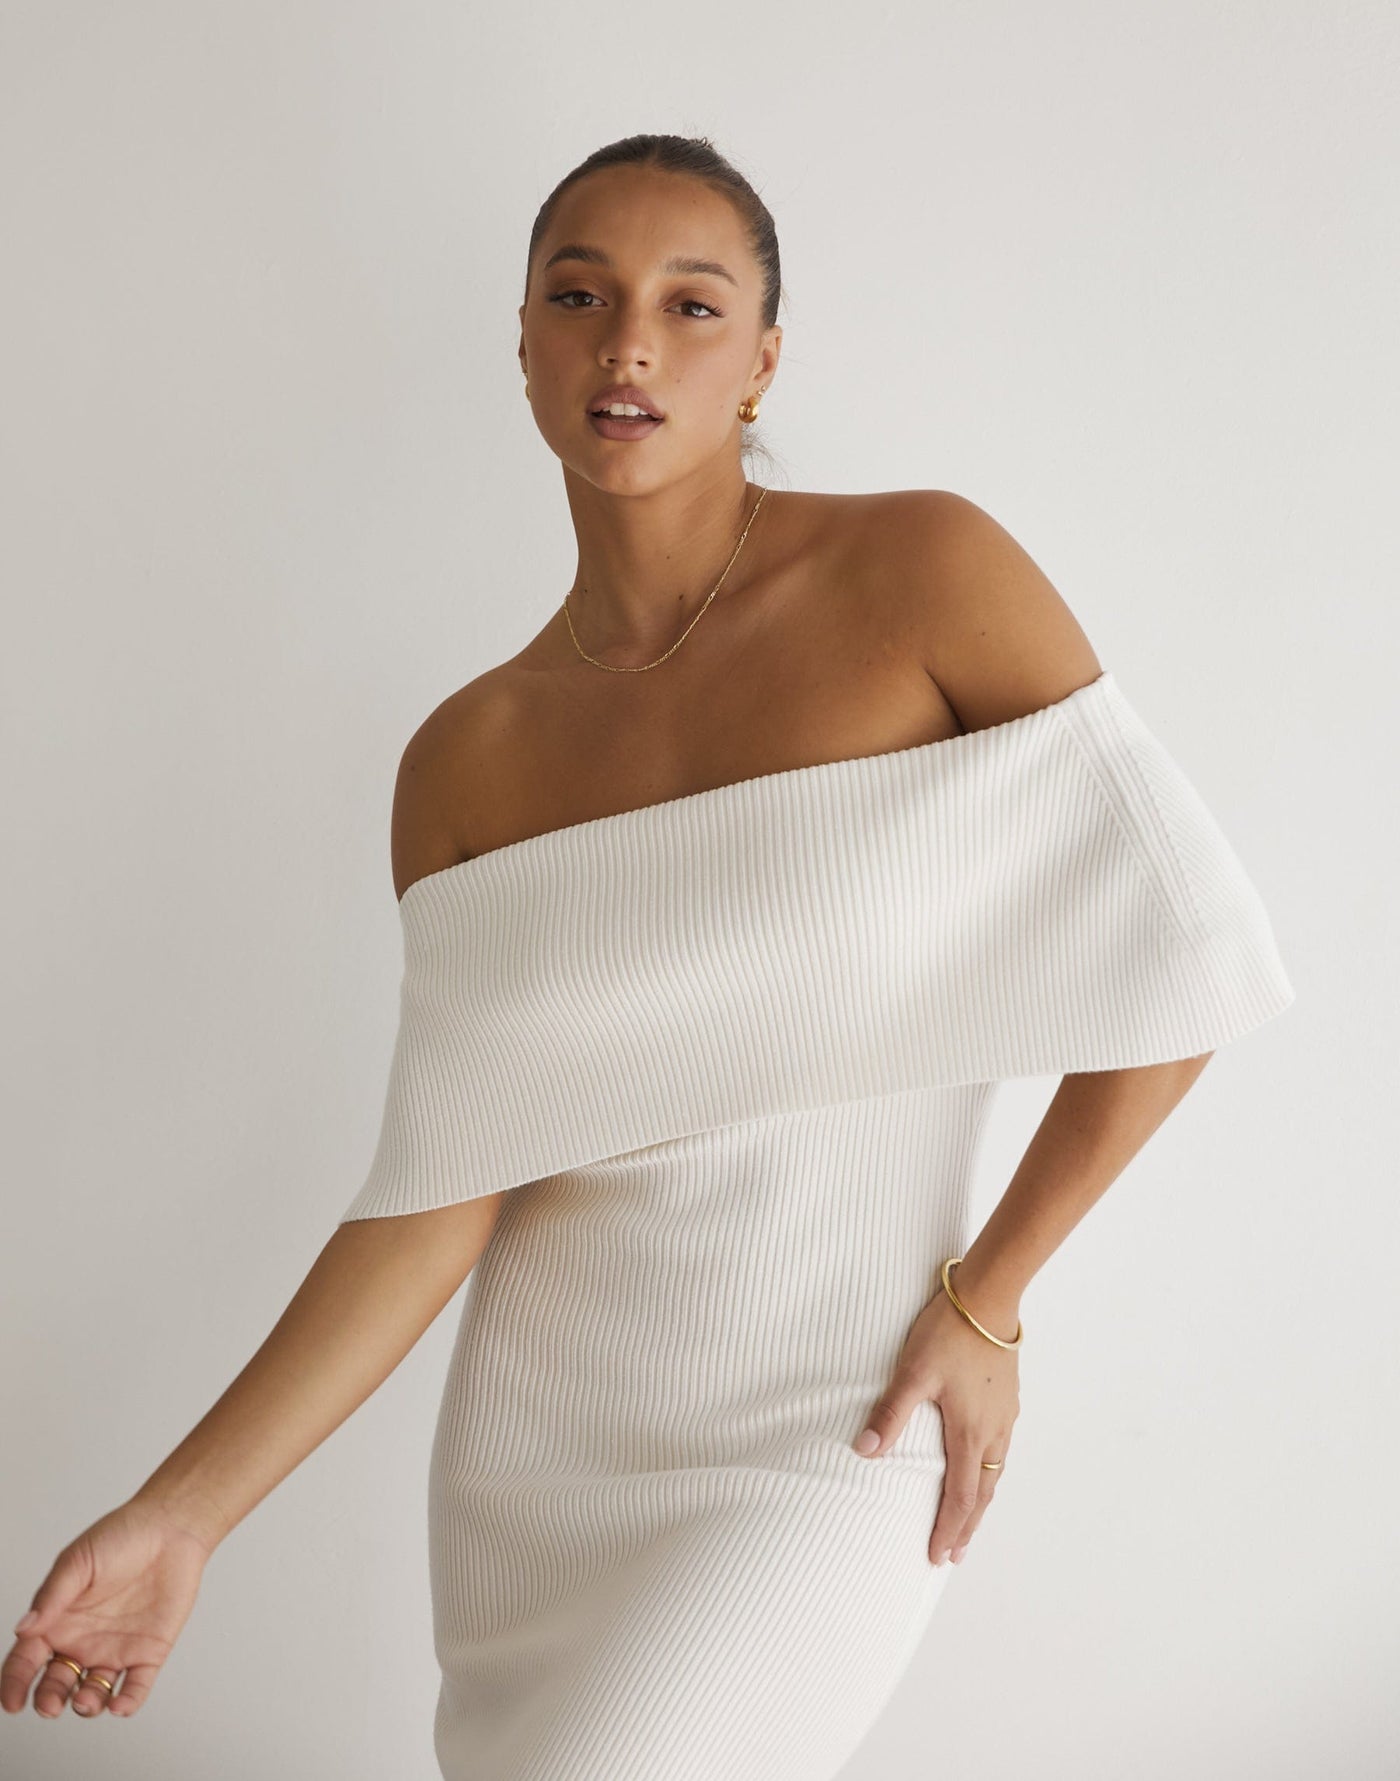 Ambiguity Maxi Dress (Cream) - Cream Knit Off The Shoulder Maxi Dress - Women's Dress - Charcoal Clothing